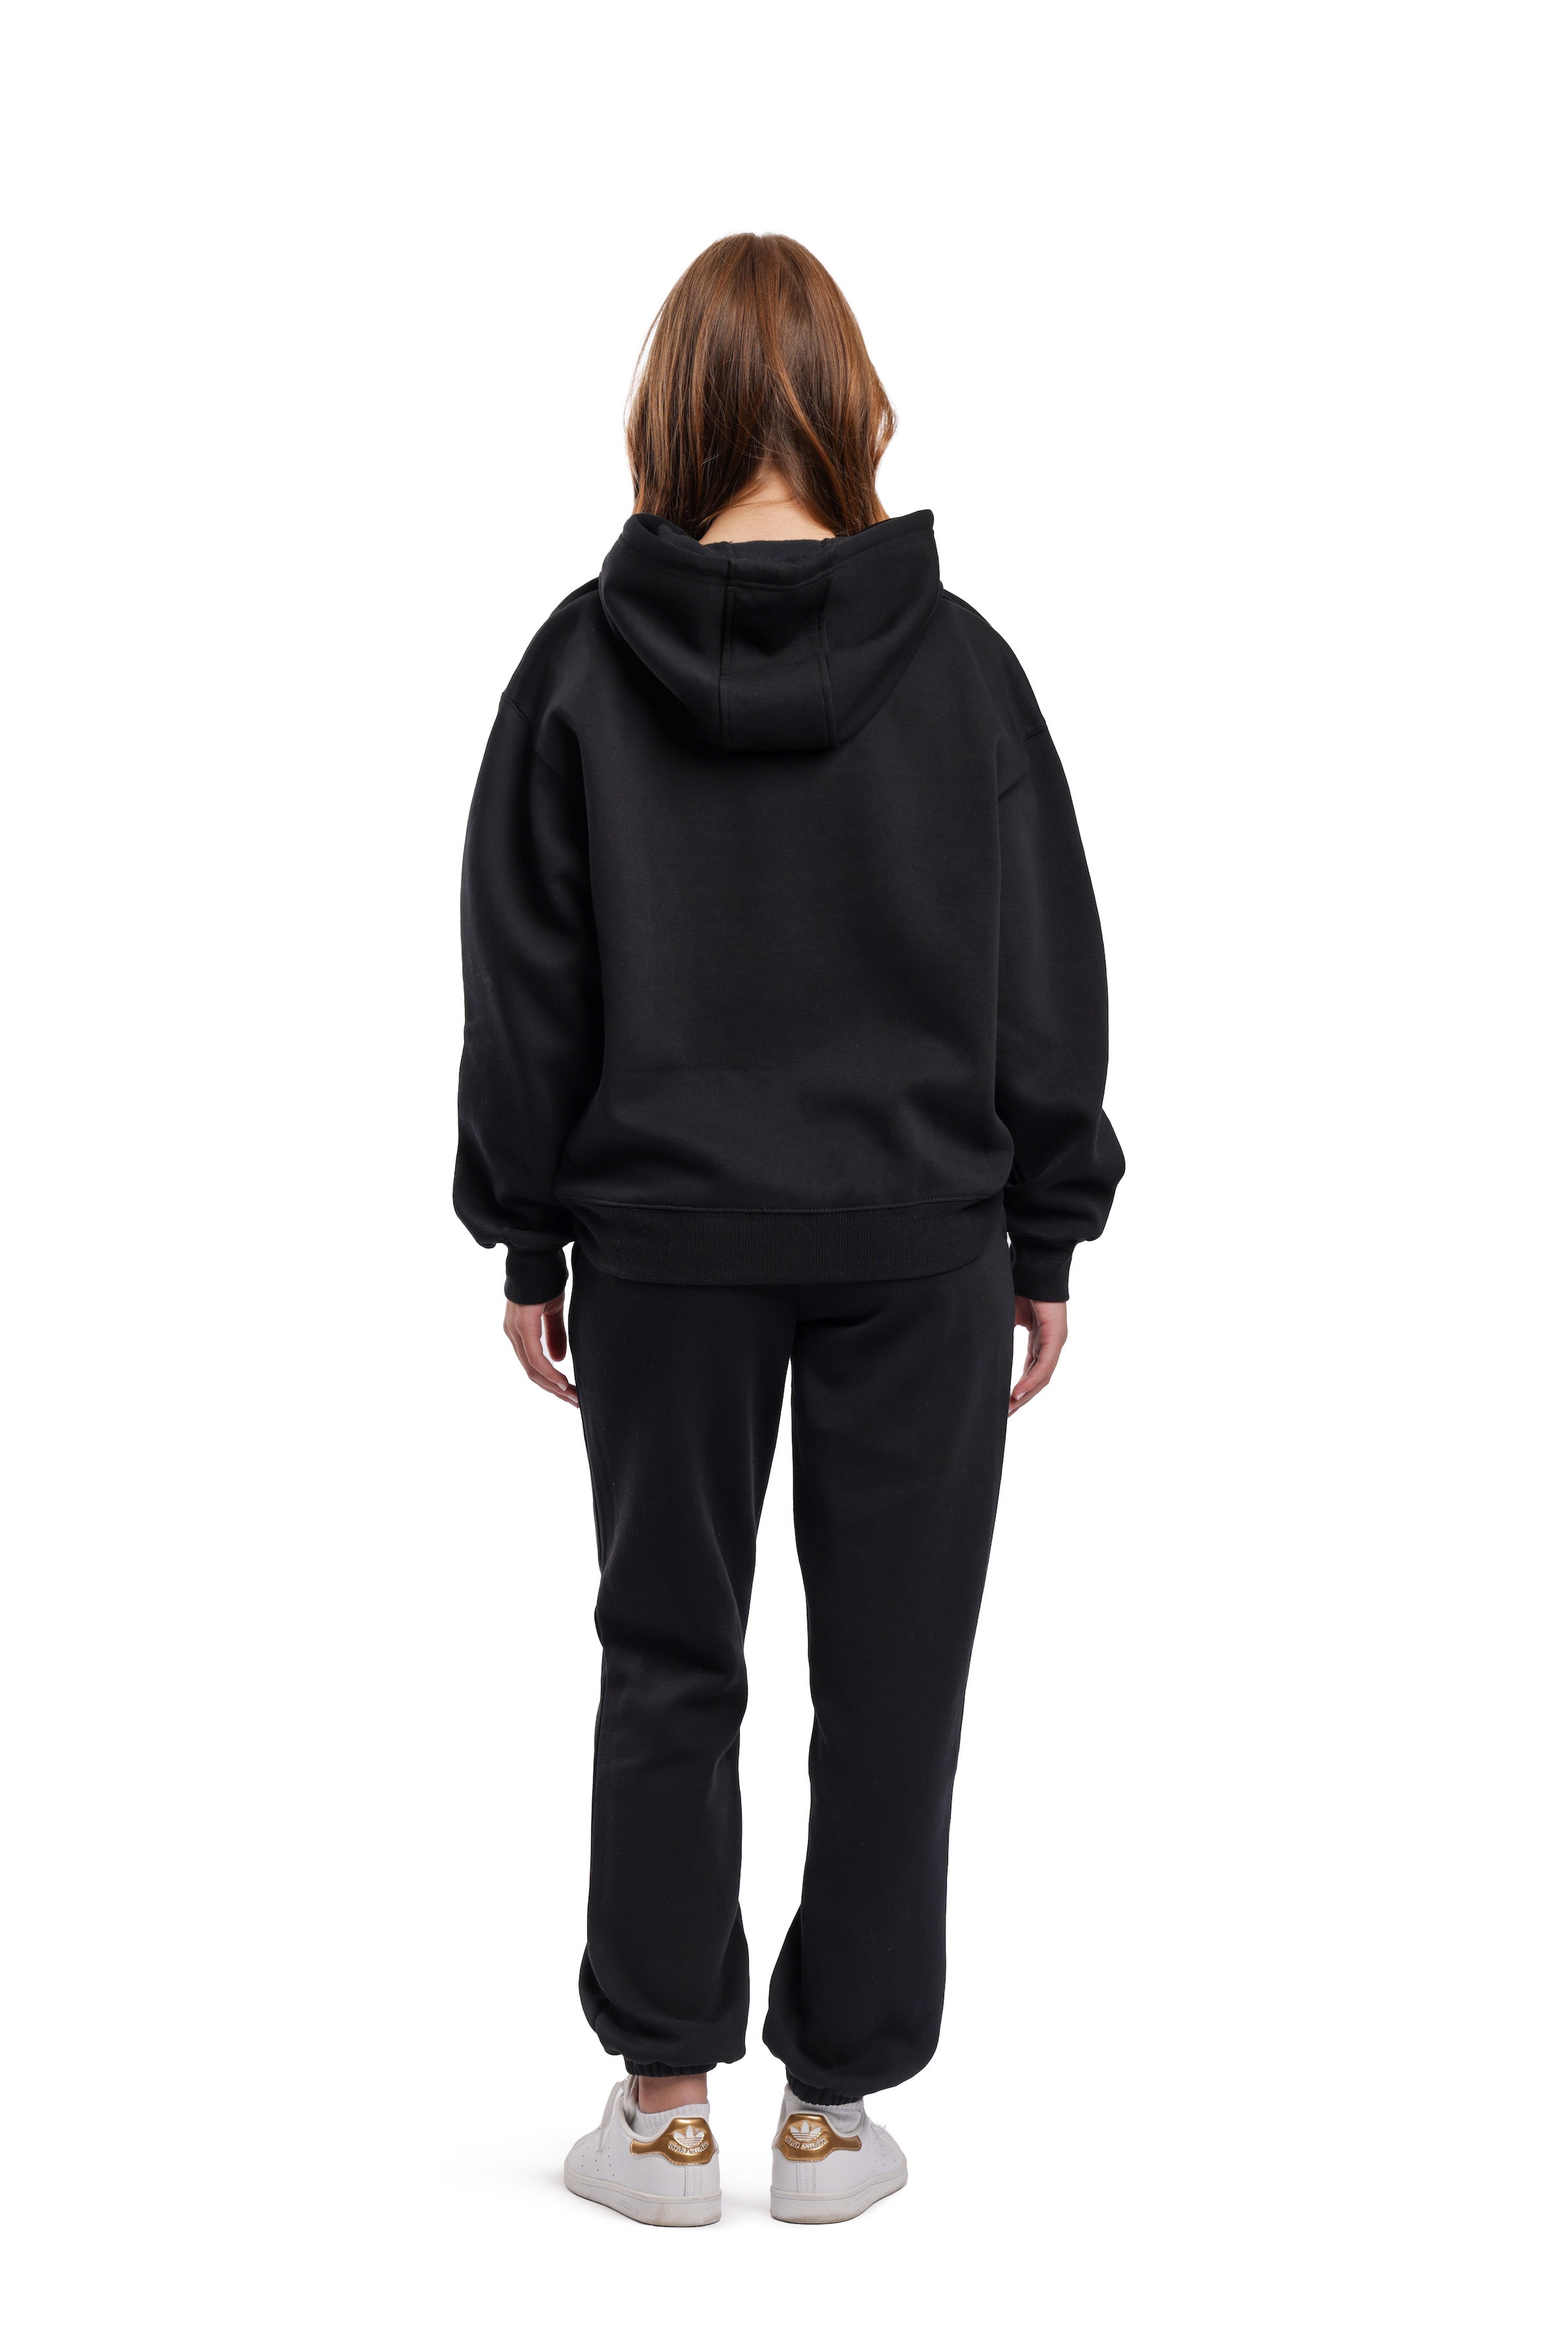 Sweatsuit Set Womens (Black) – Modern Minx